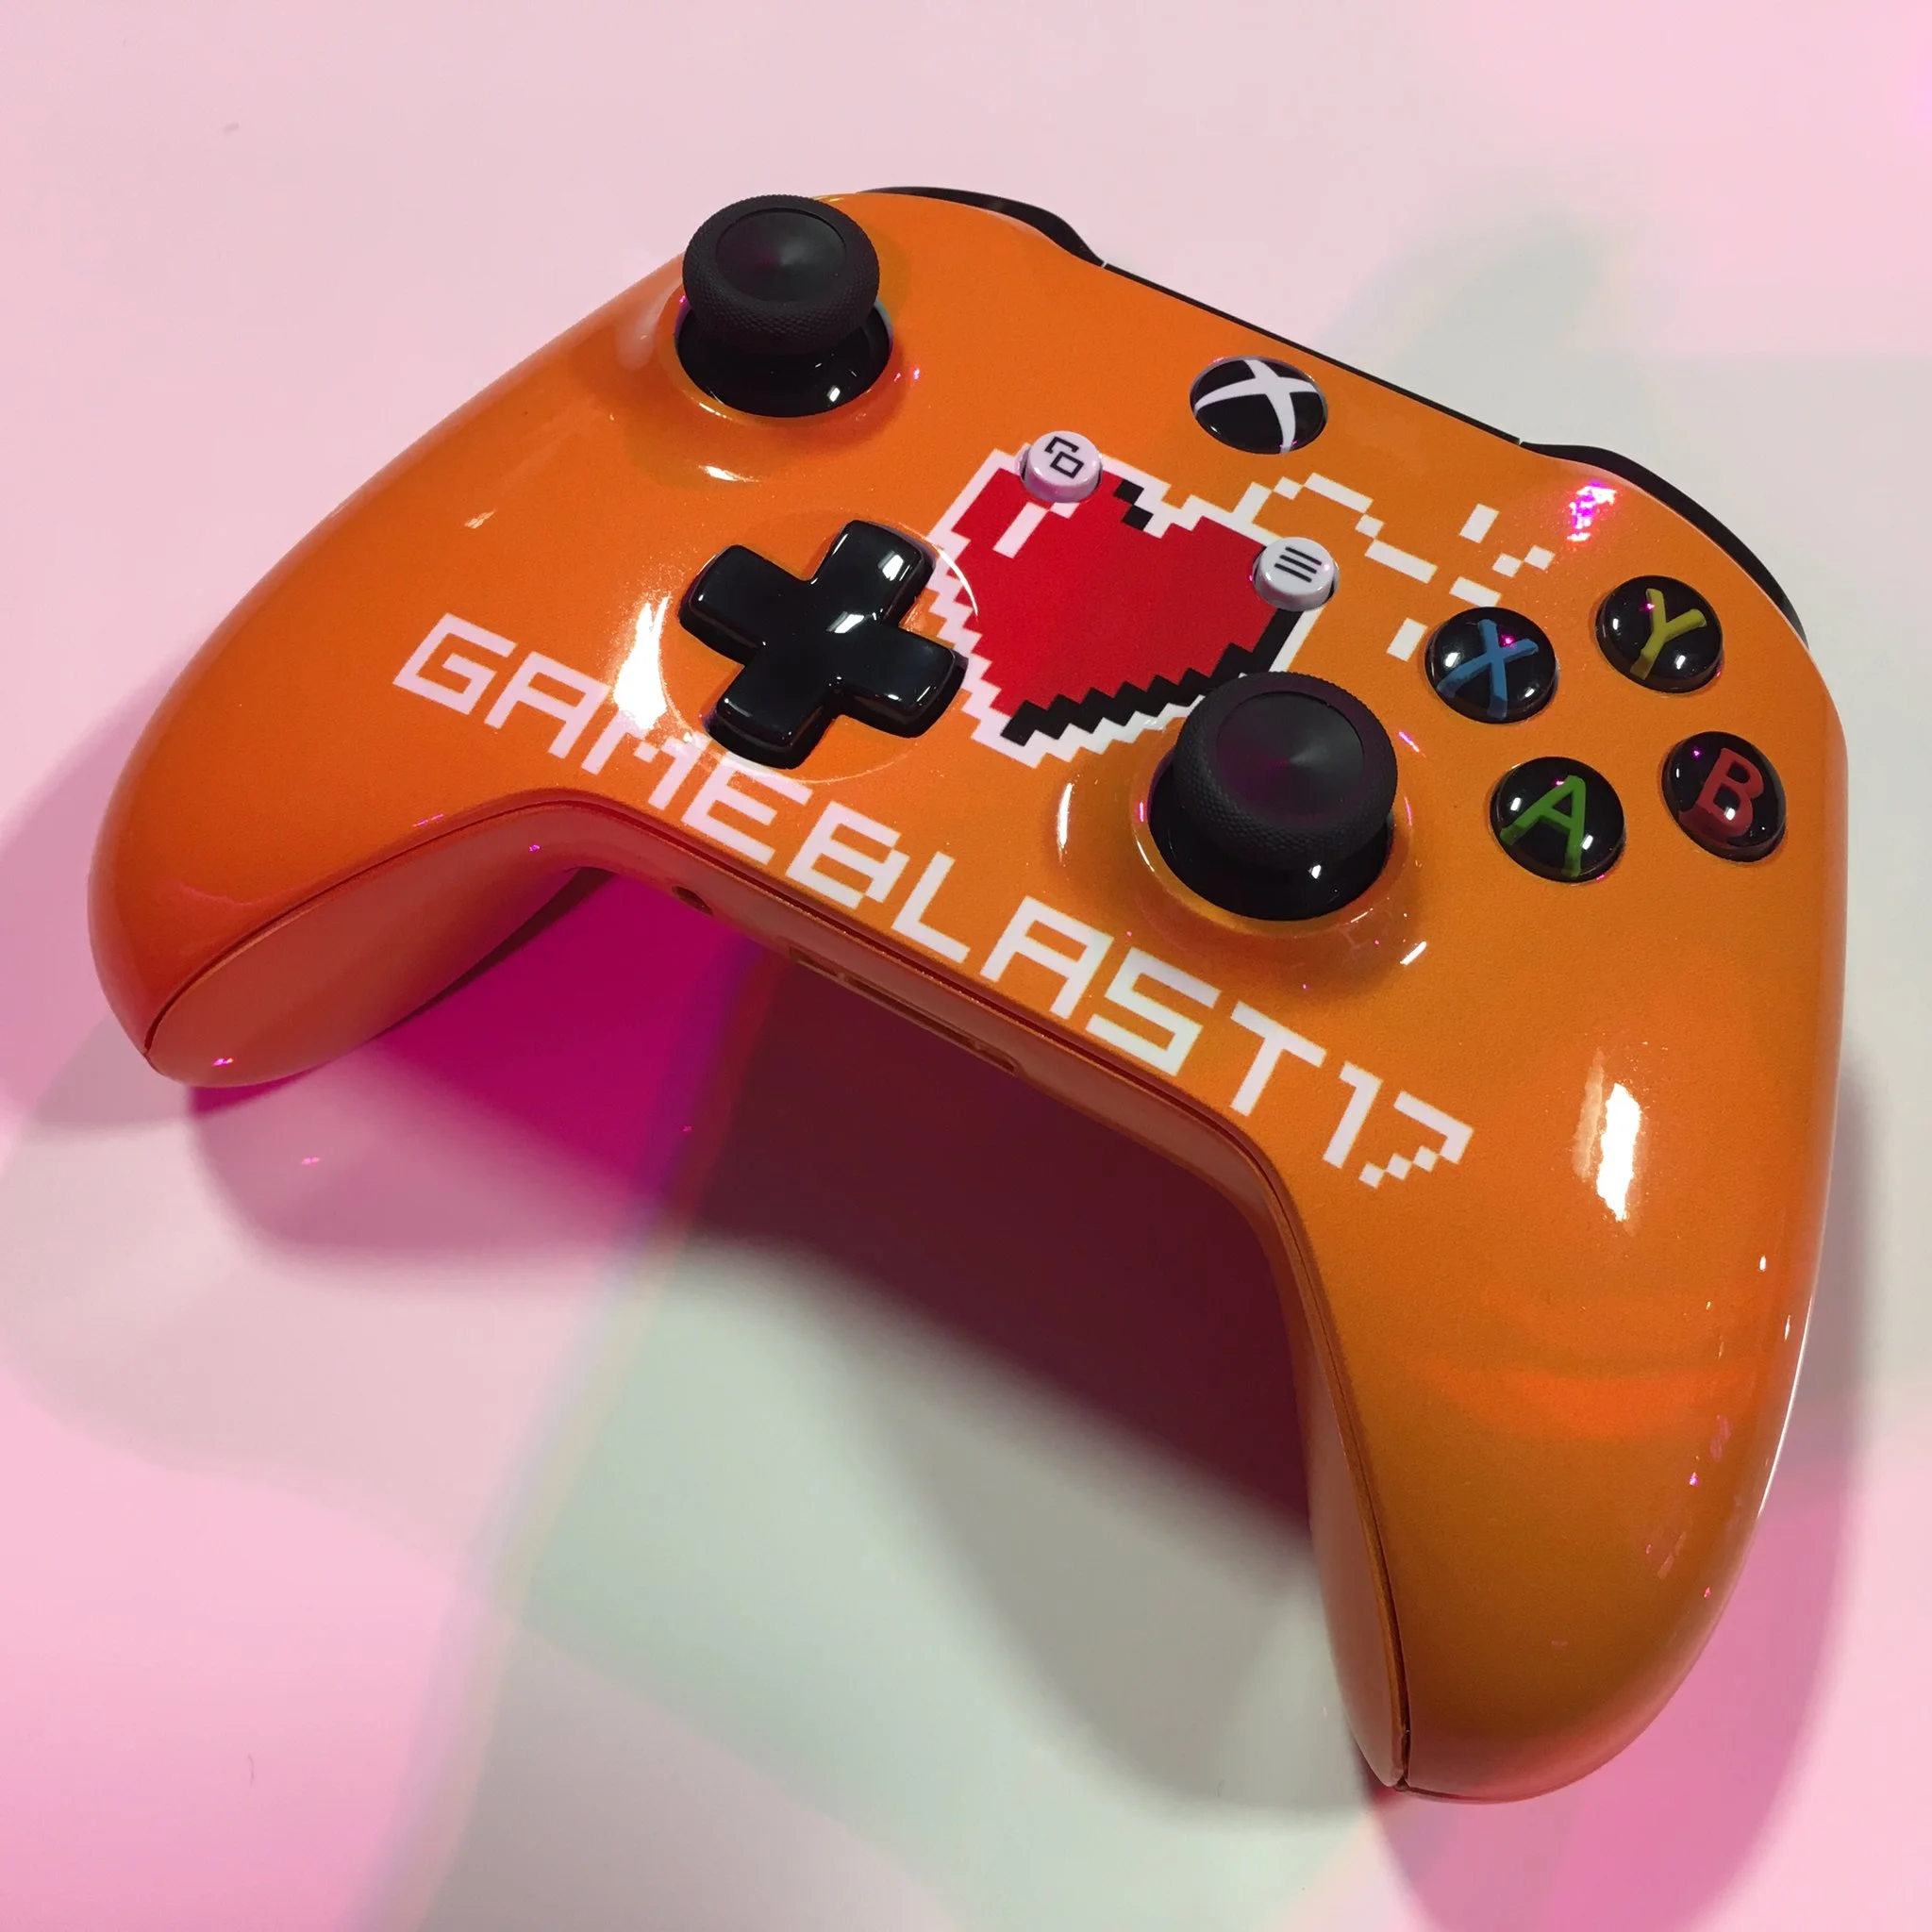  Microsoft Xbox One S Gameblast 17 Orange Controller